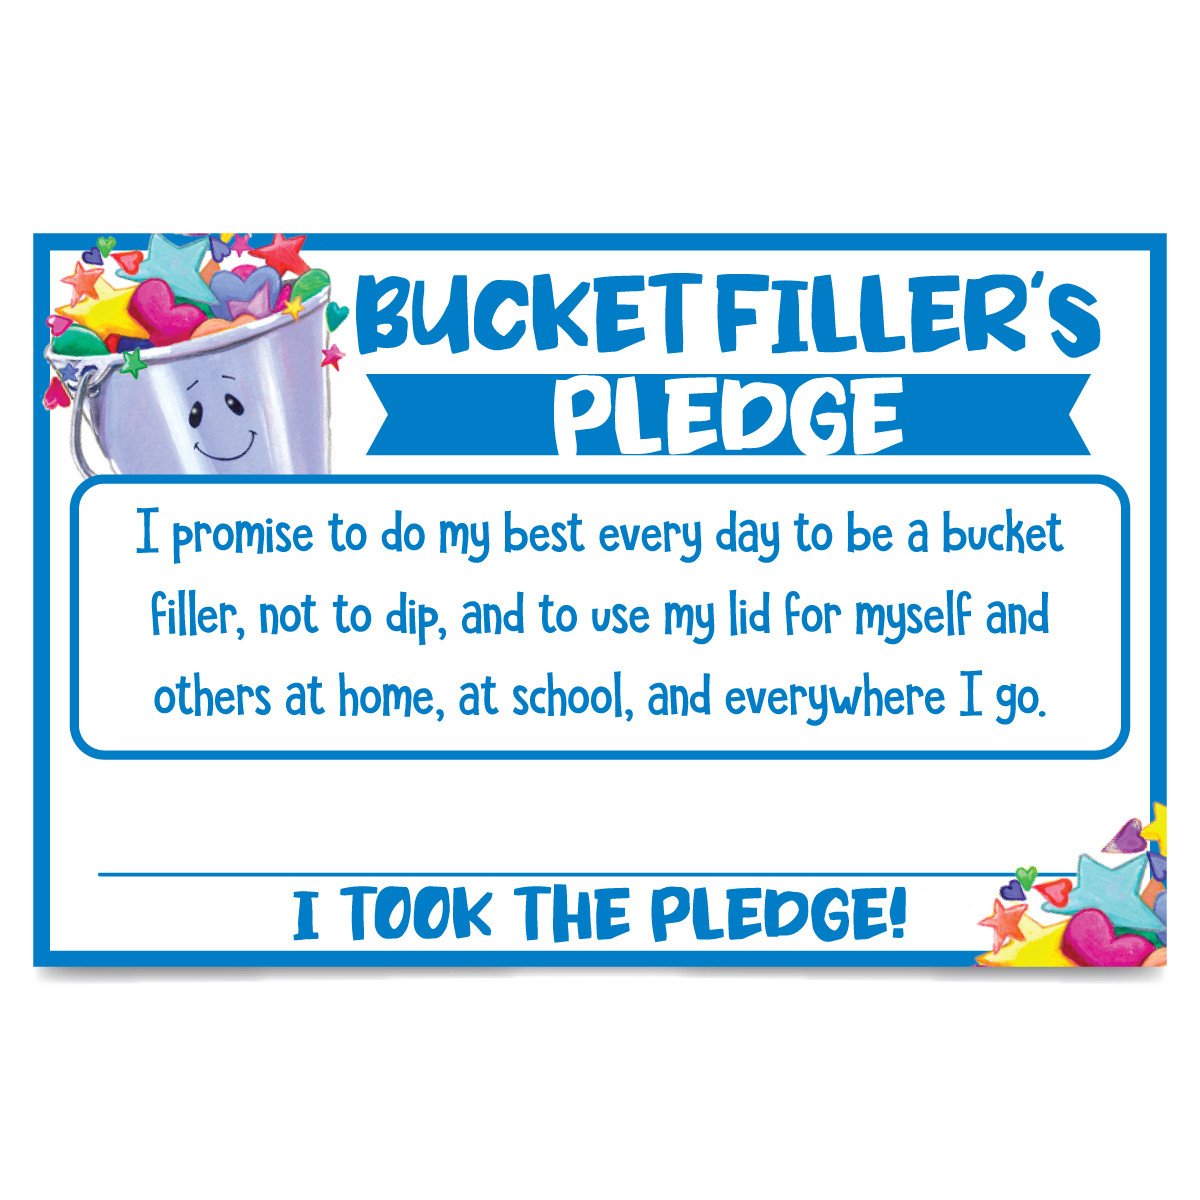 Custom 5.5" x 8.5" Certificate - Bucket Filler's Pledge 